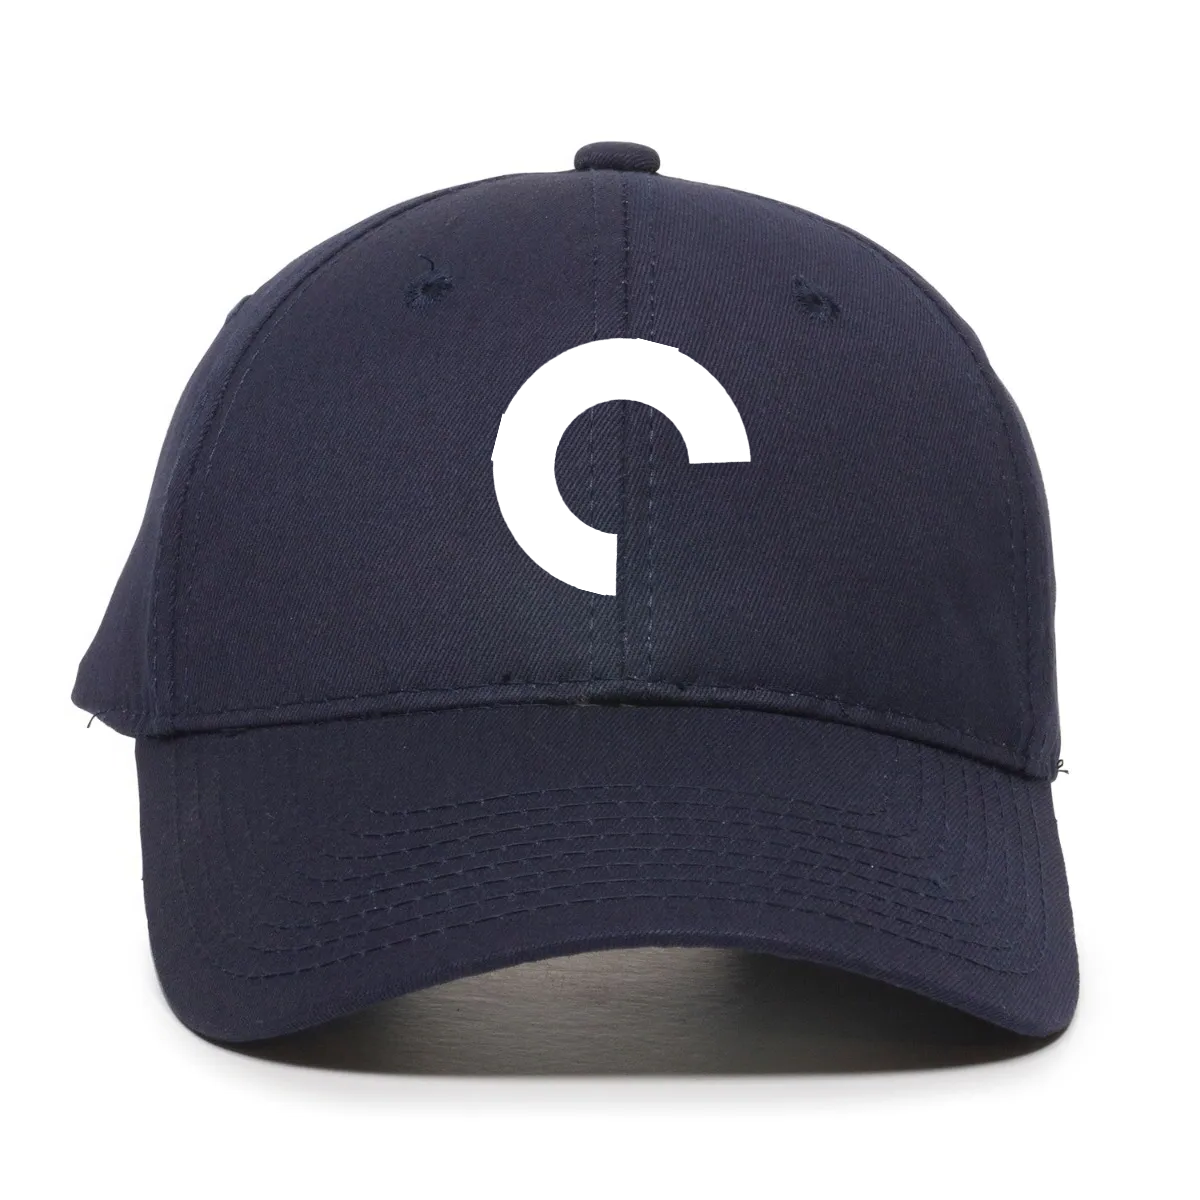 Outdoor Cap GL-271 - Cotton Twill Solid Back Cap